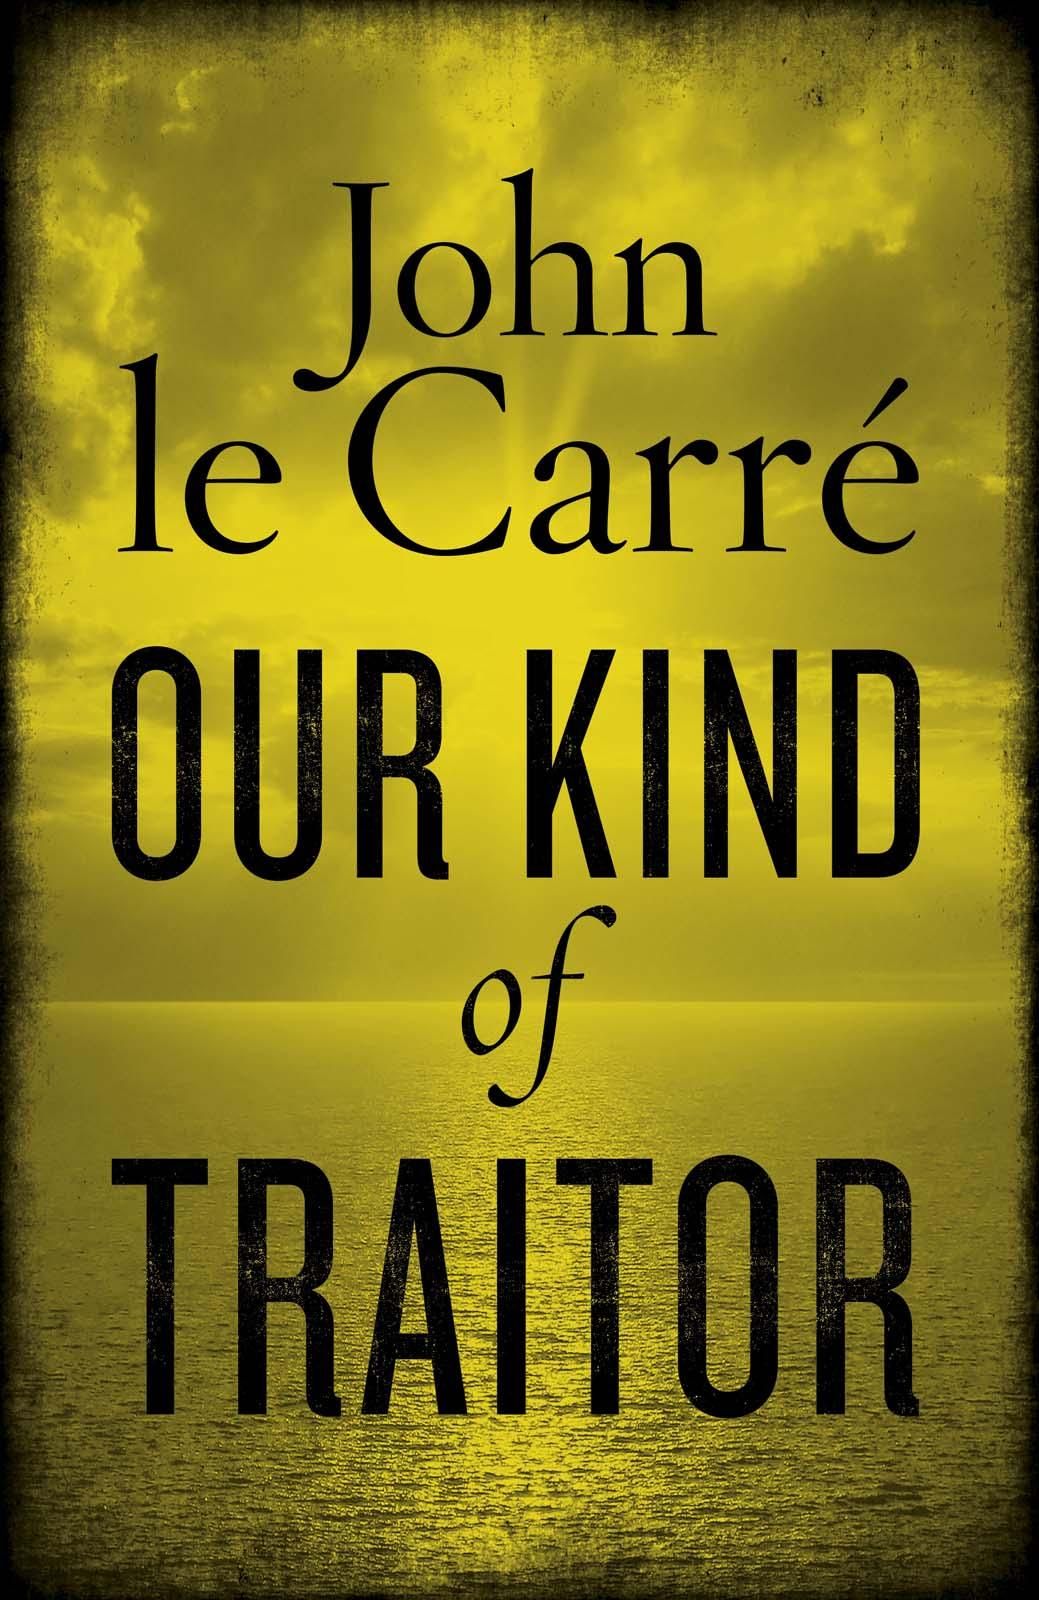 le Carre John - Our kind of traitor скачать бесплатно